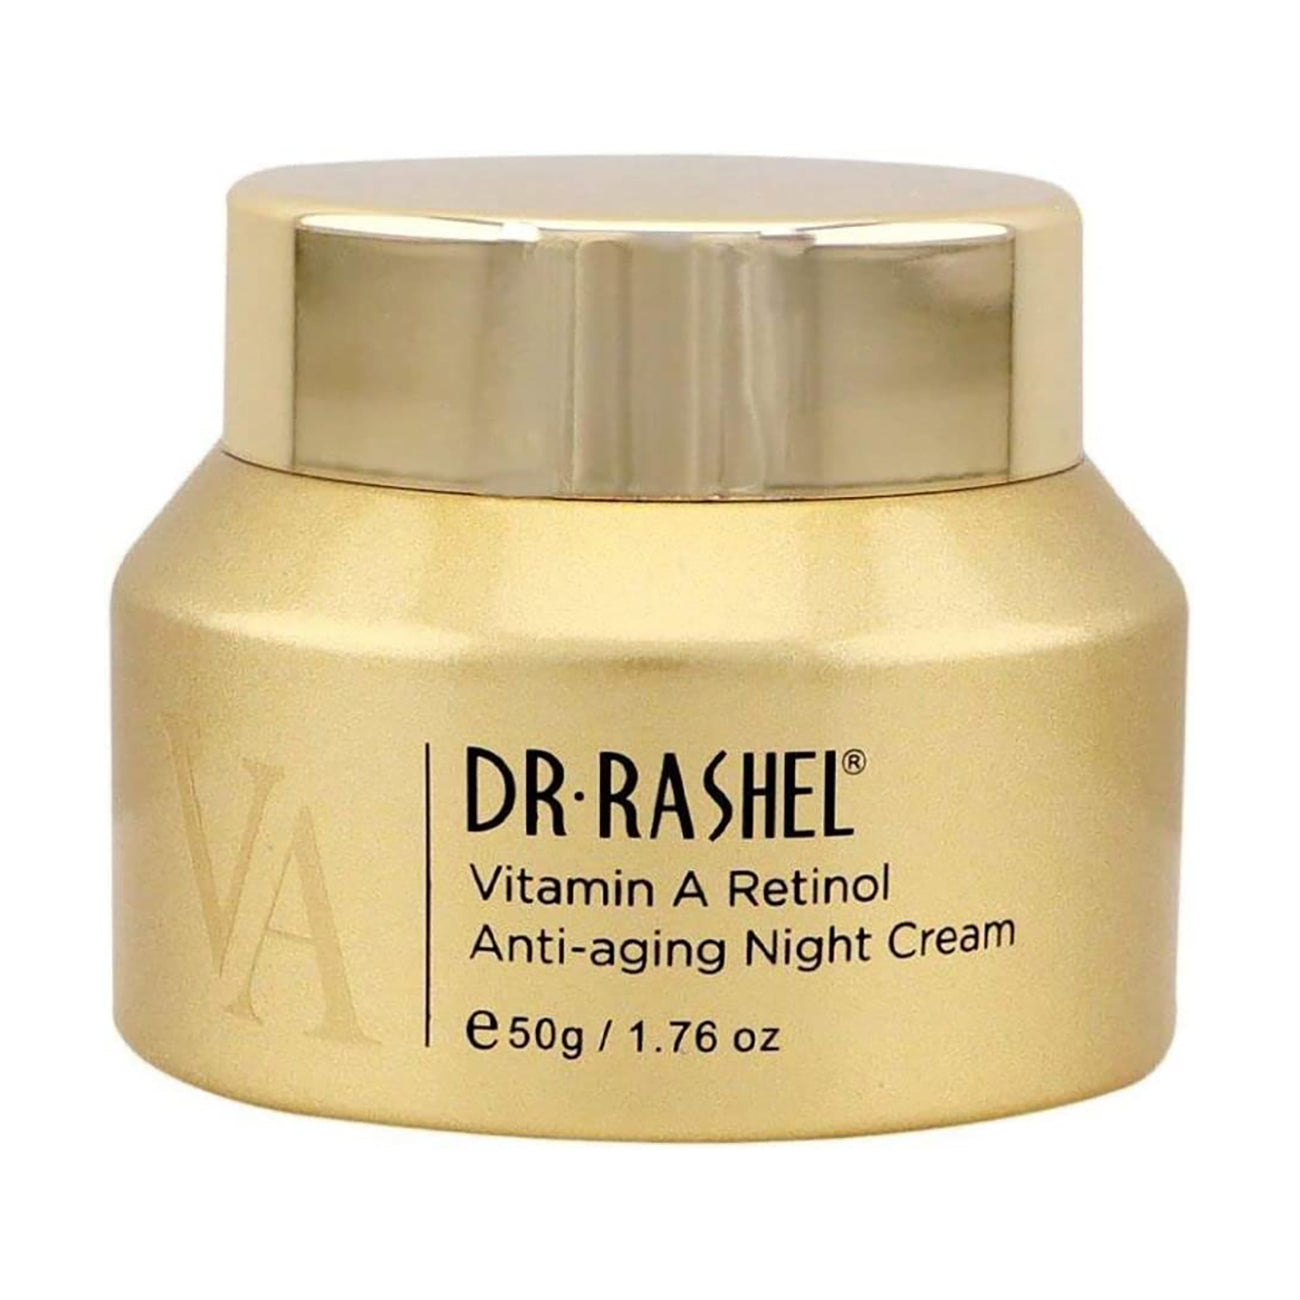 Dr Rashel VITAMIN A RETINOL ANTI-AGING NIGHT CREAM, 50g